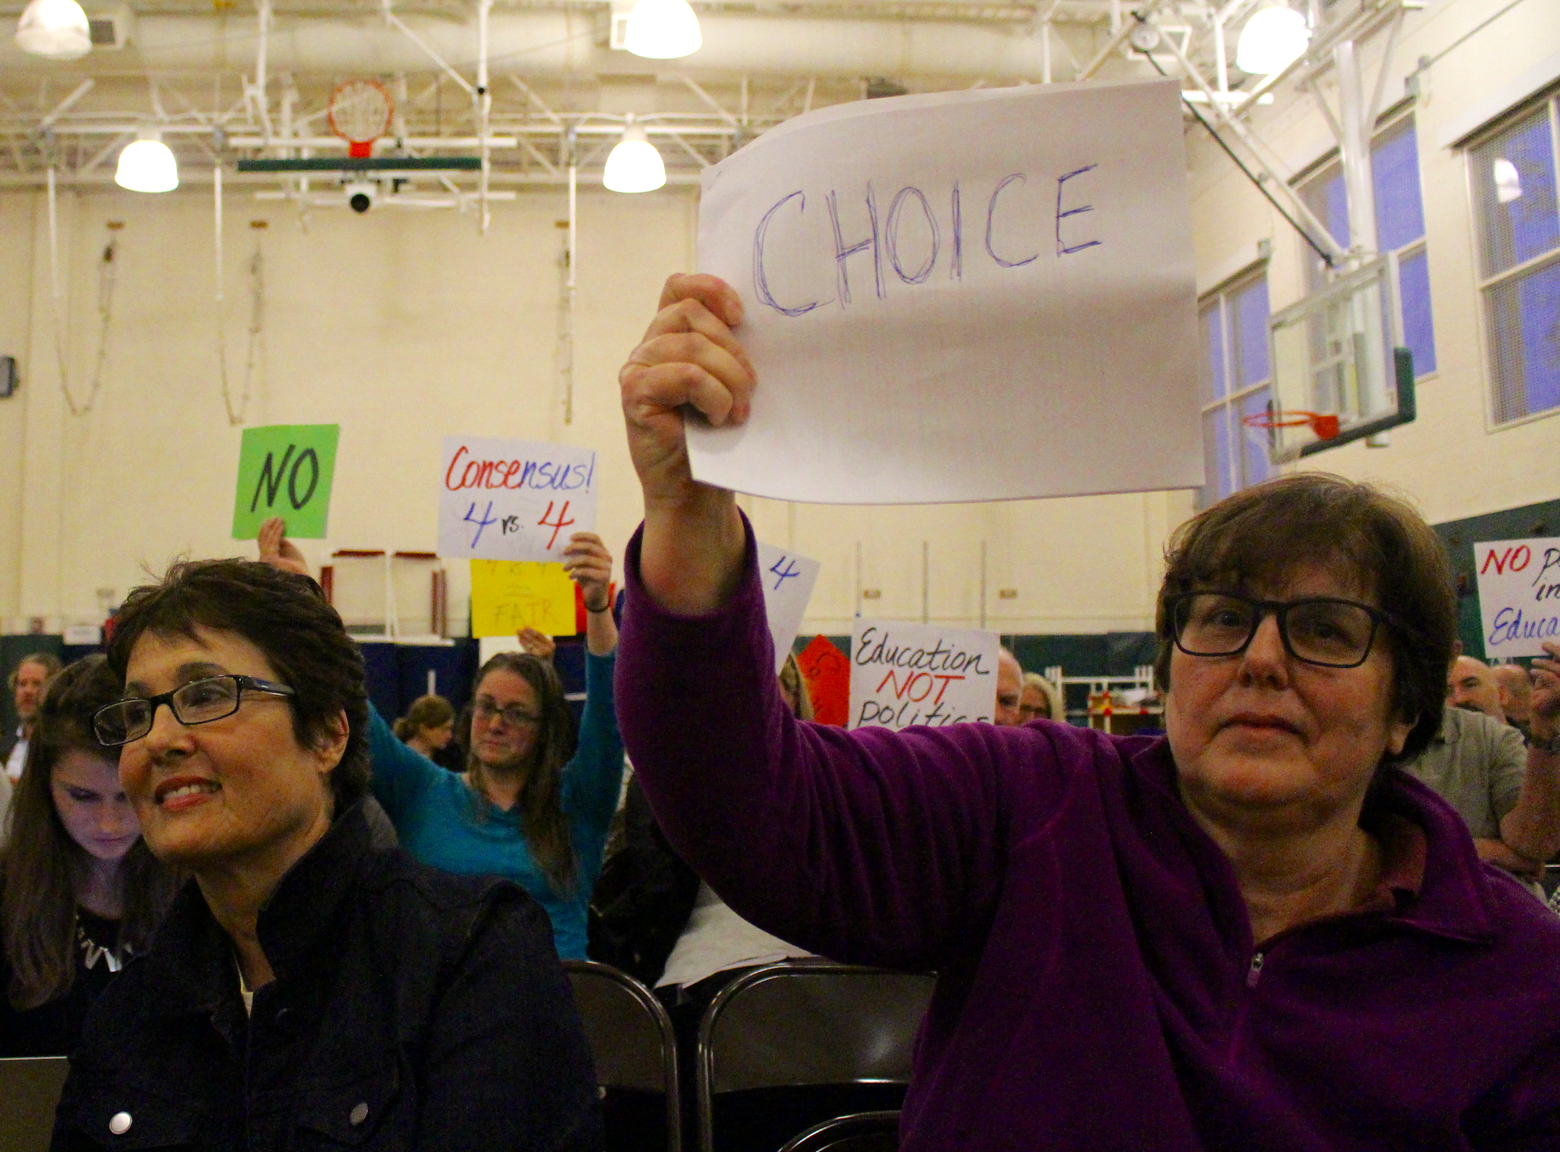 Karen Fassuliotis at a BOE meeting with a sign indicating her support BOE Charter Change. Credit Julia Moch